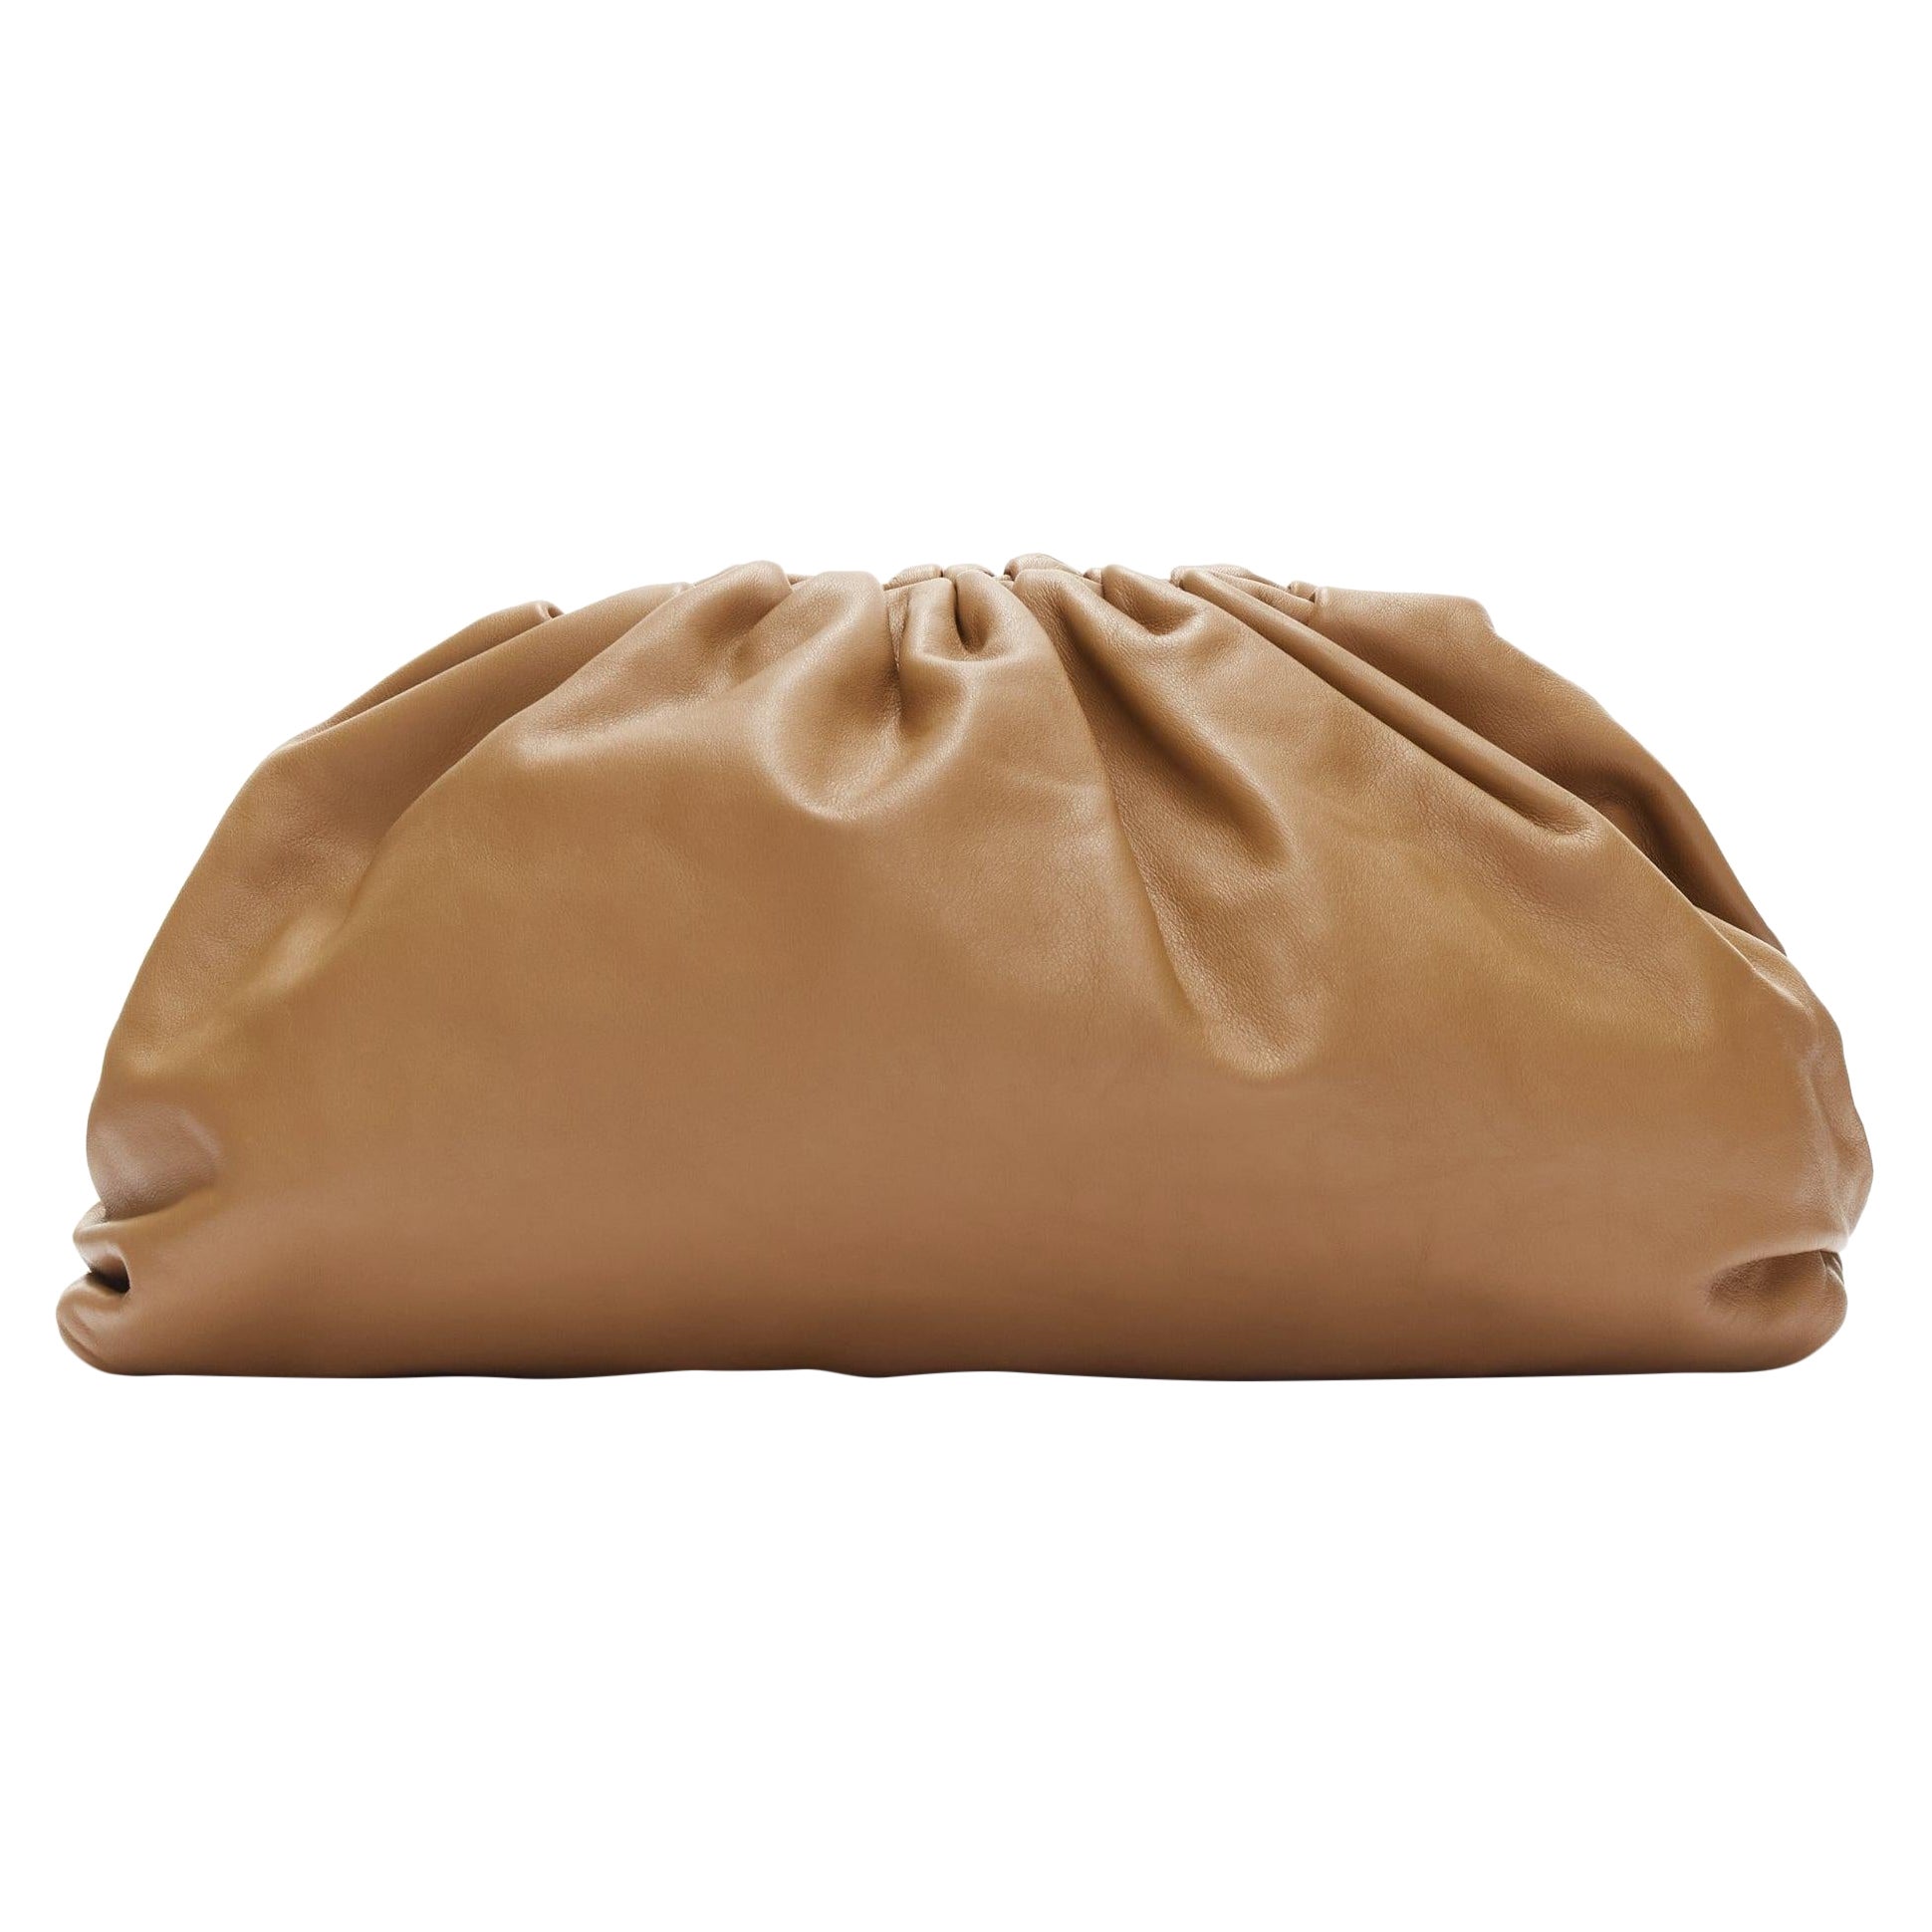 BOTTEGA VENETA The Pouch brown leather dumpling clutch bag For Sale